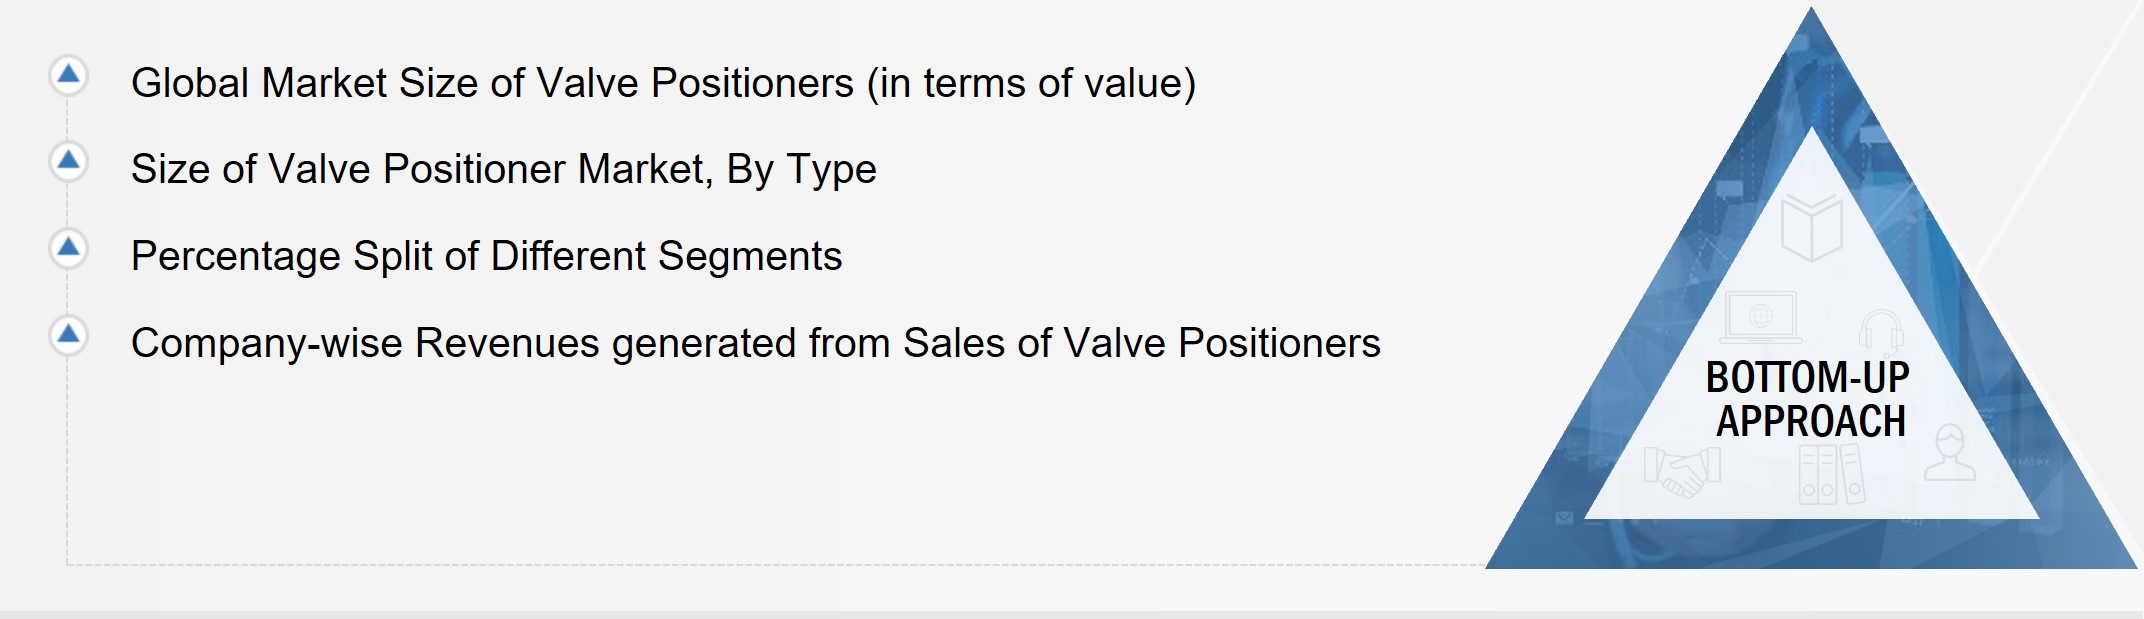 Valve Positioner Market Size, andBottom-Up Approach 